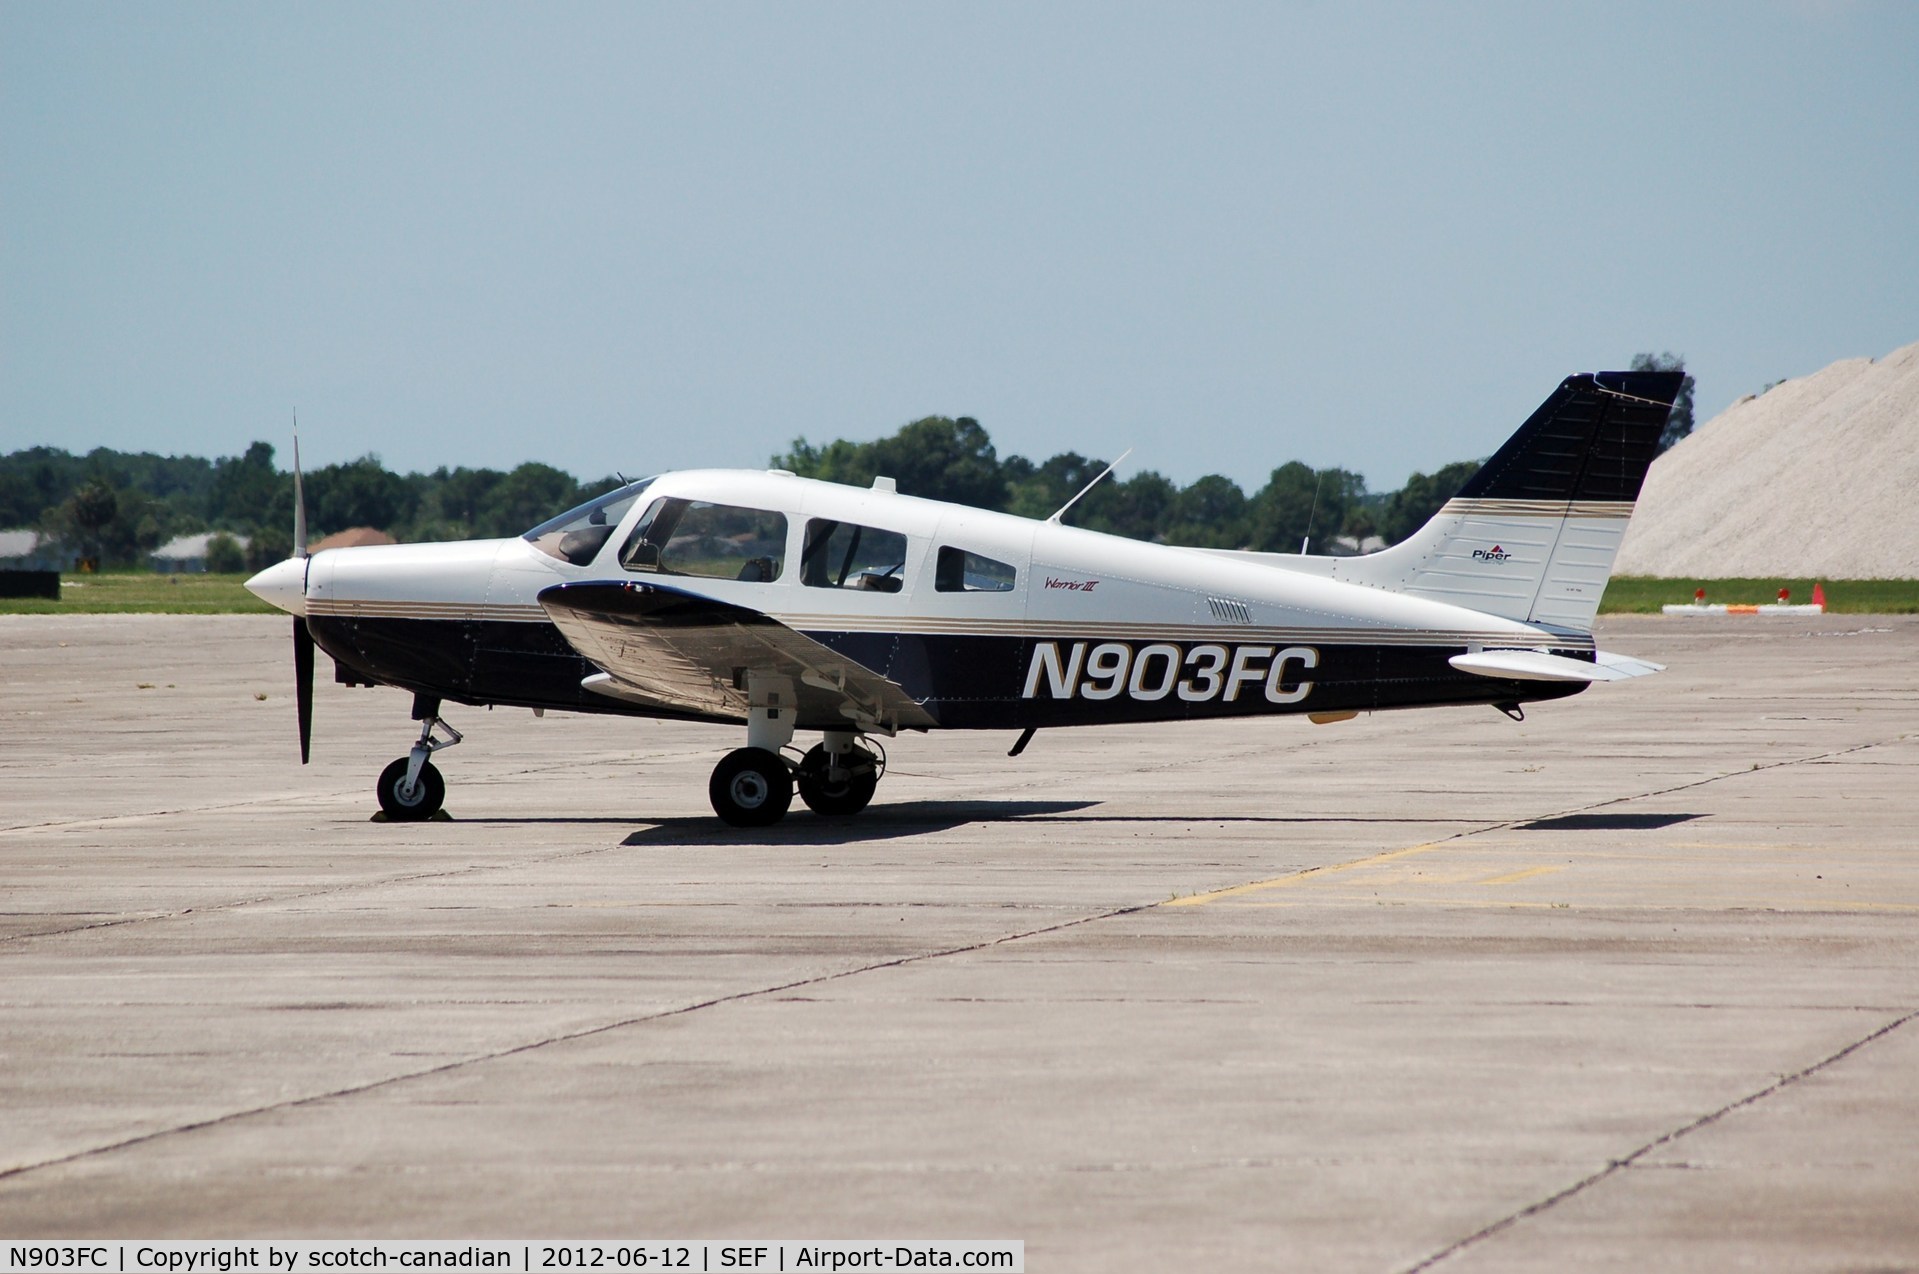 N903FC, 2003 Piper PA-28-161 C/N 2842175, 2003 Piper PA-28-161 N903FC at Sebring Regional Airport, Sebring, FL